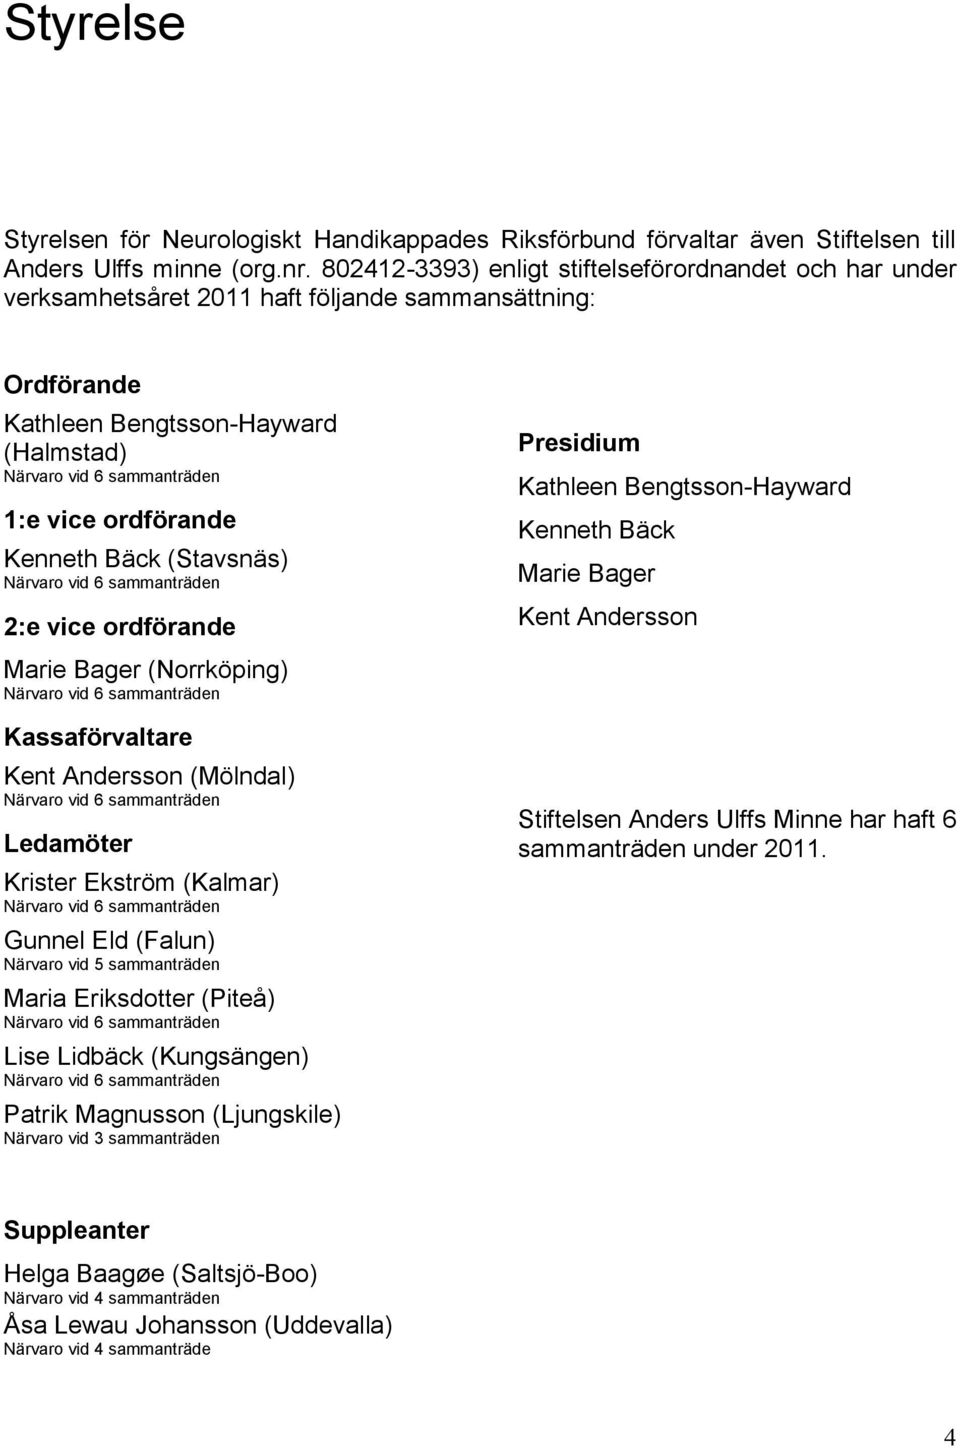 2:e vice ordförande Marie Bager (Norrköping) Kassaförvaltare Kent Andersson (Mölndal) Ledamöter Krister Ekström (Kalmar) Gunnel Eld (Falun) Närvaro vid 5 sammanträden Maria Eriksdotter (Piteå) Lise